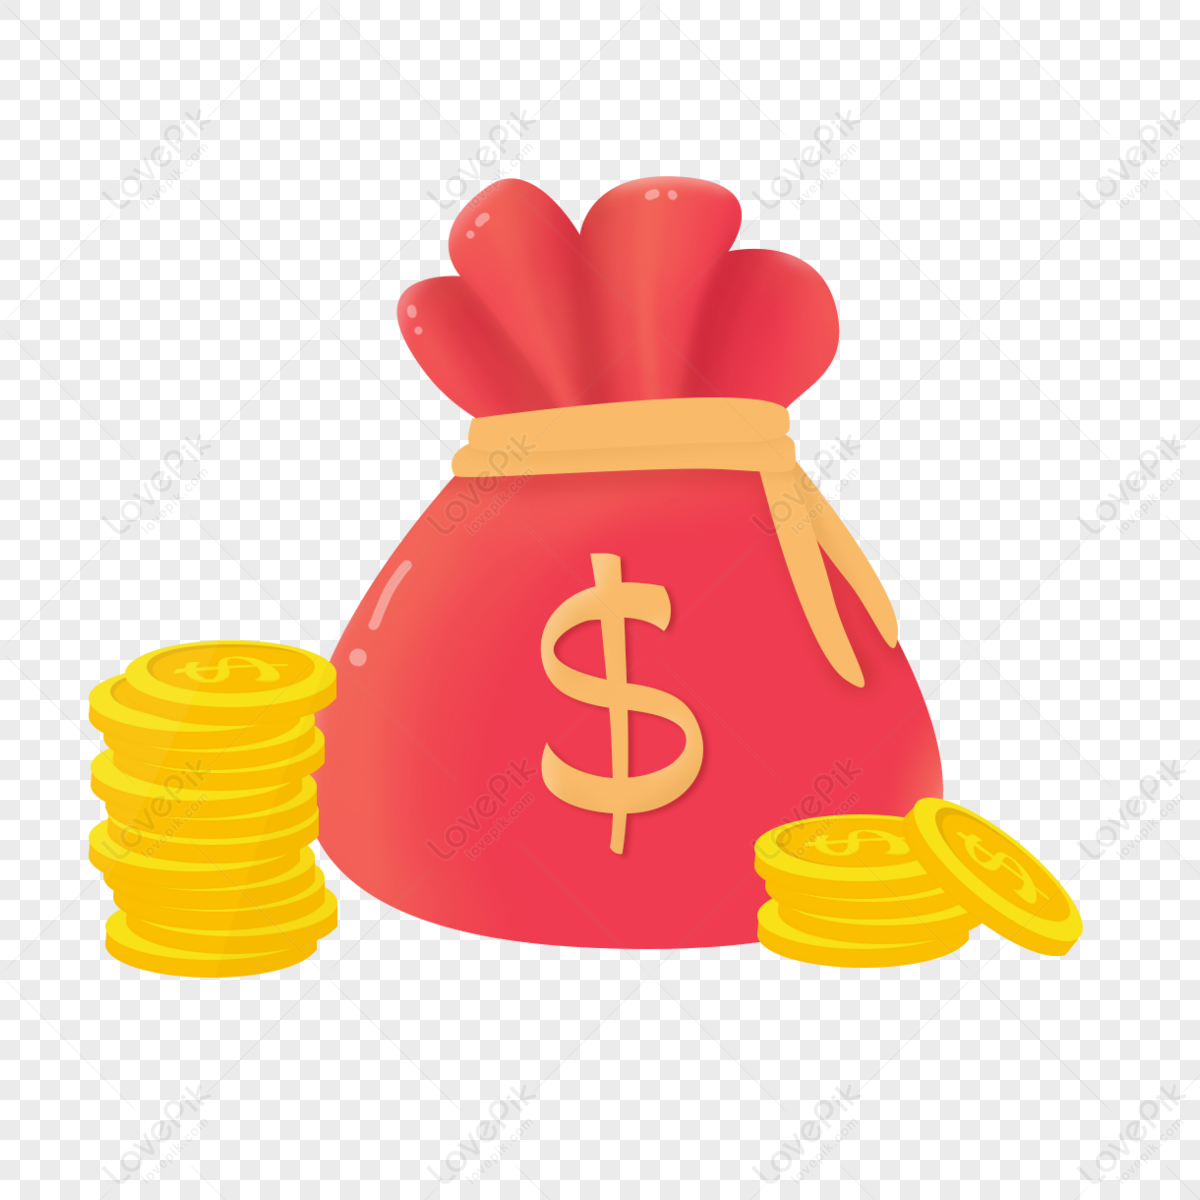 Money Bag Clip Art at Clker.com - vector clip art online, royalty free &  public domain